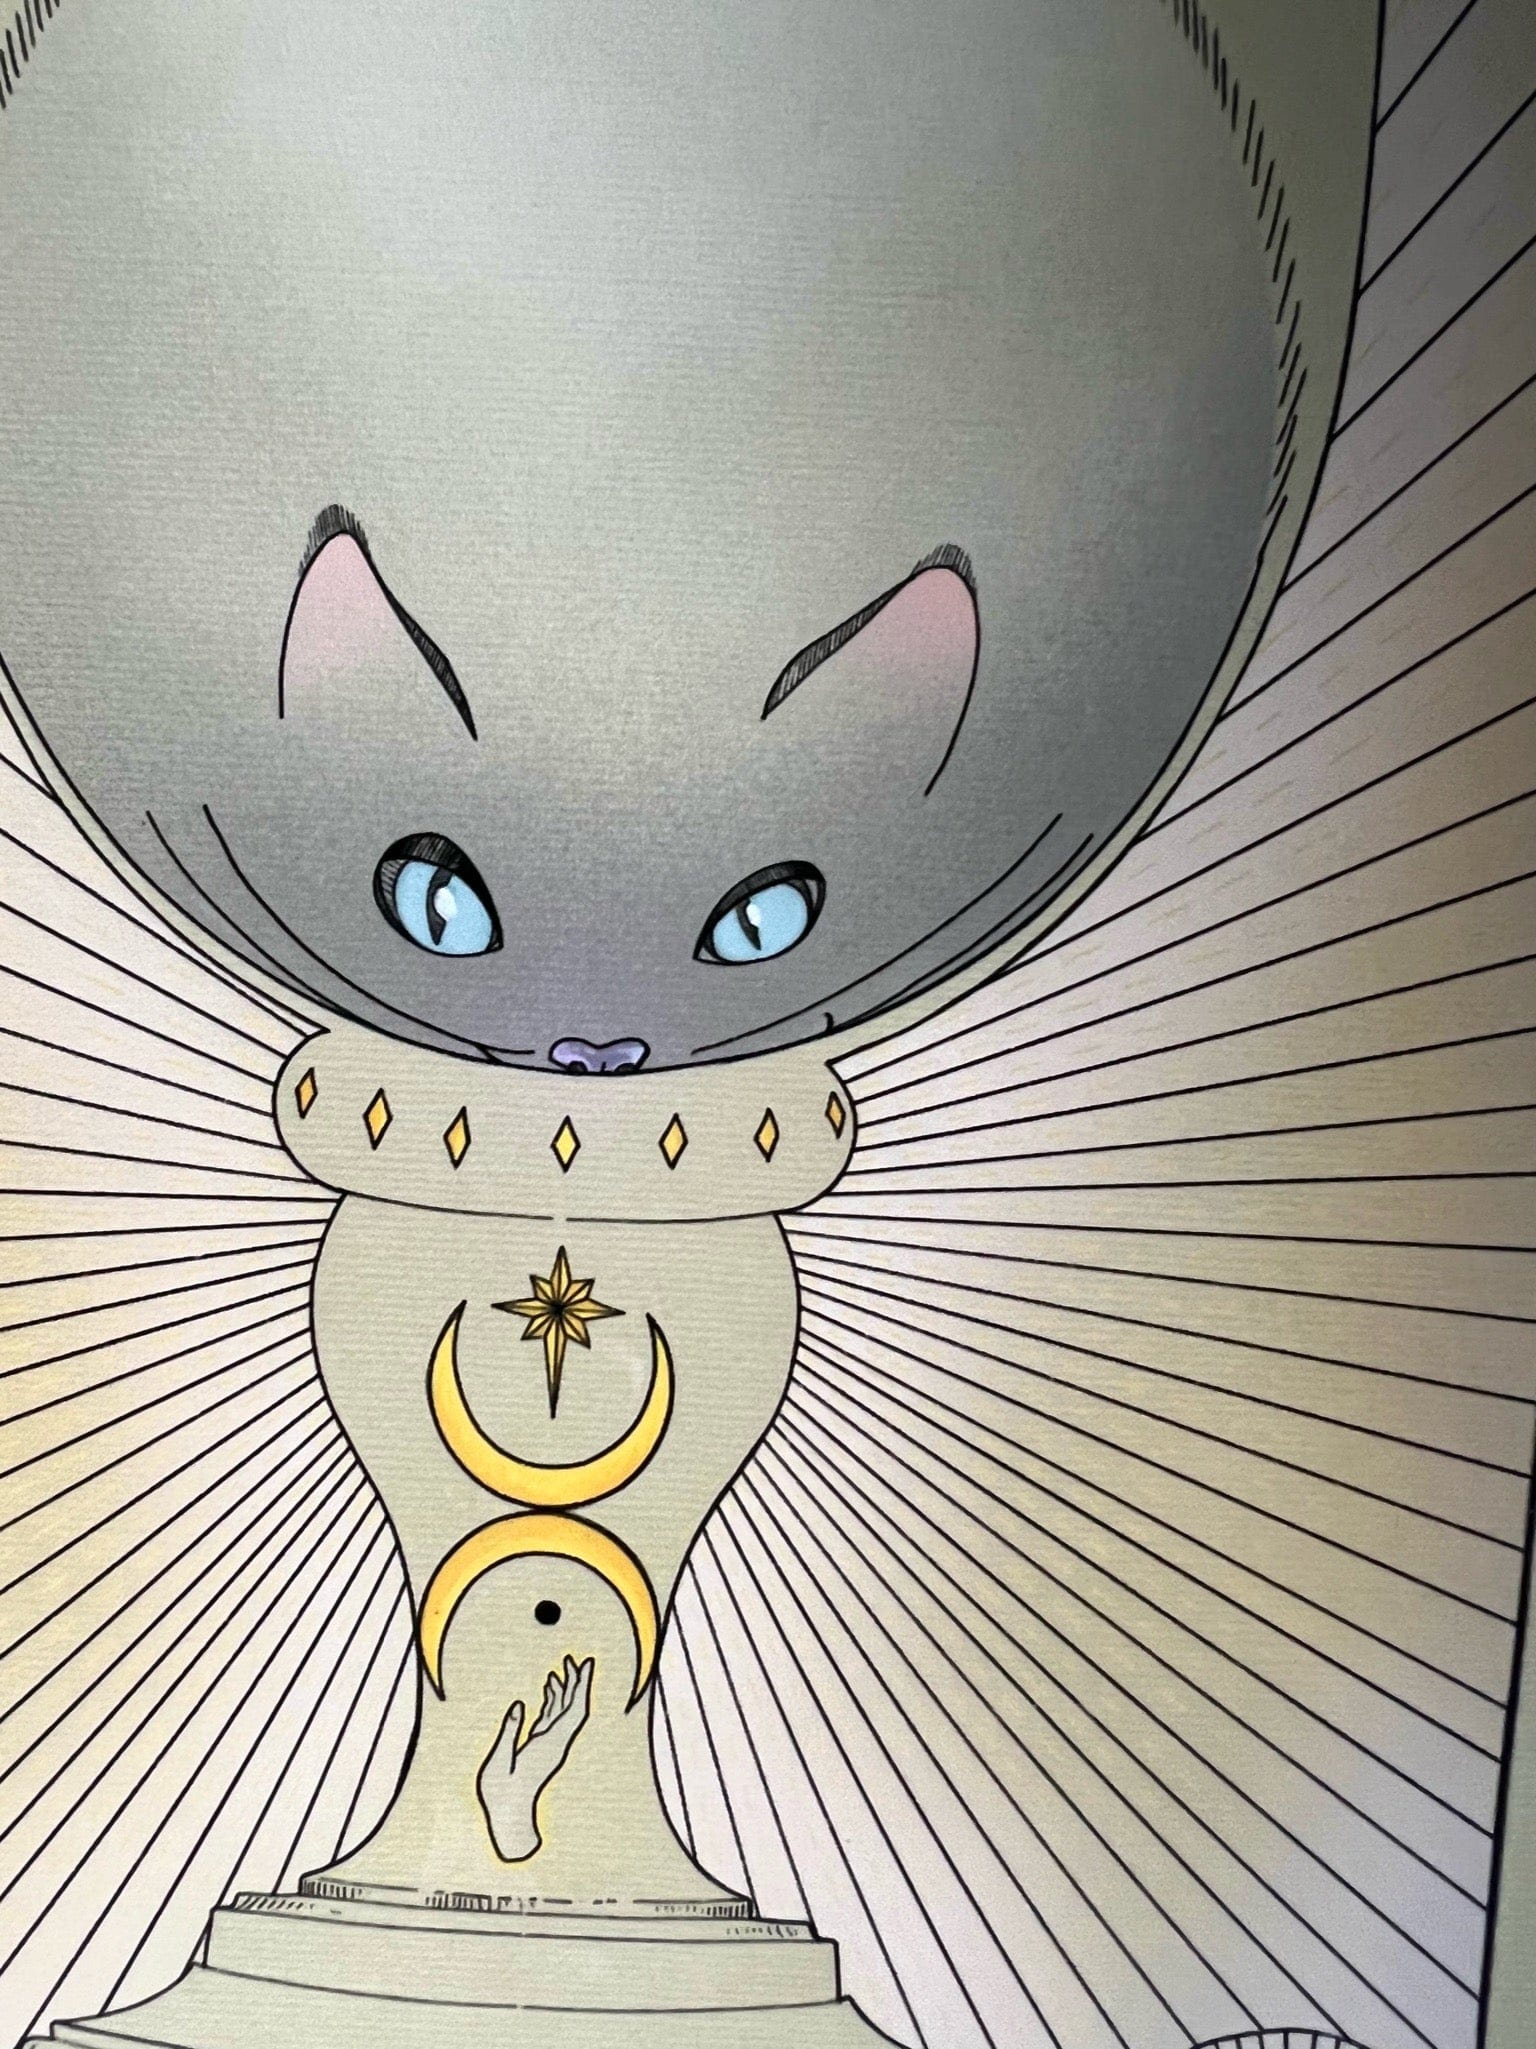 The Magician Art Print Tarot Cats Art Print